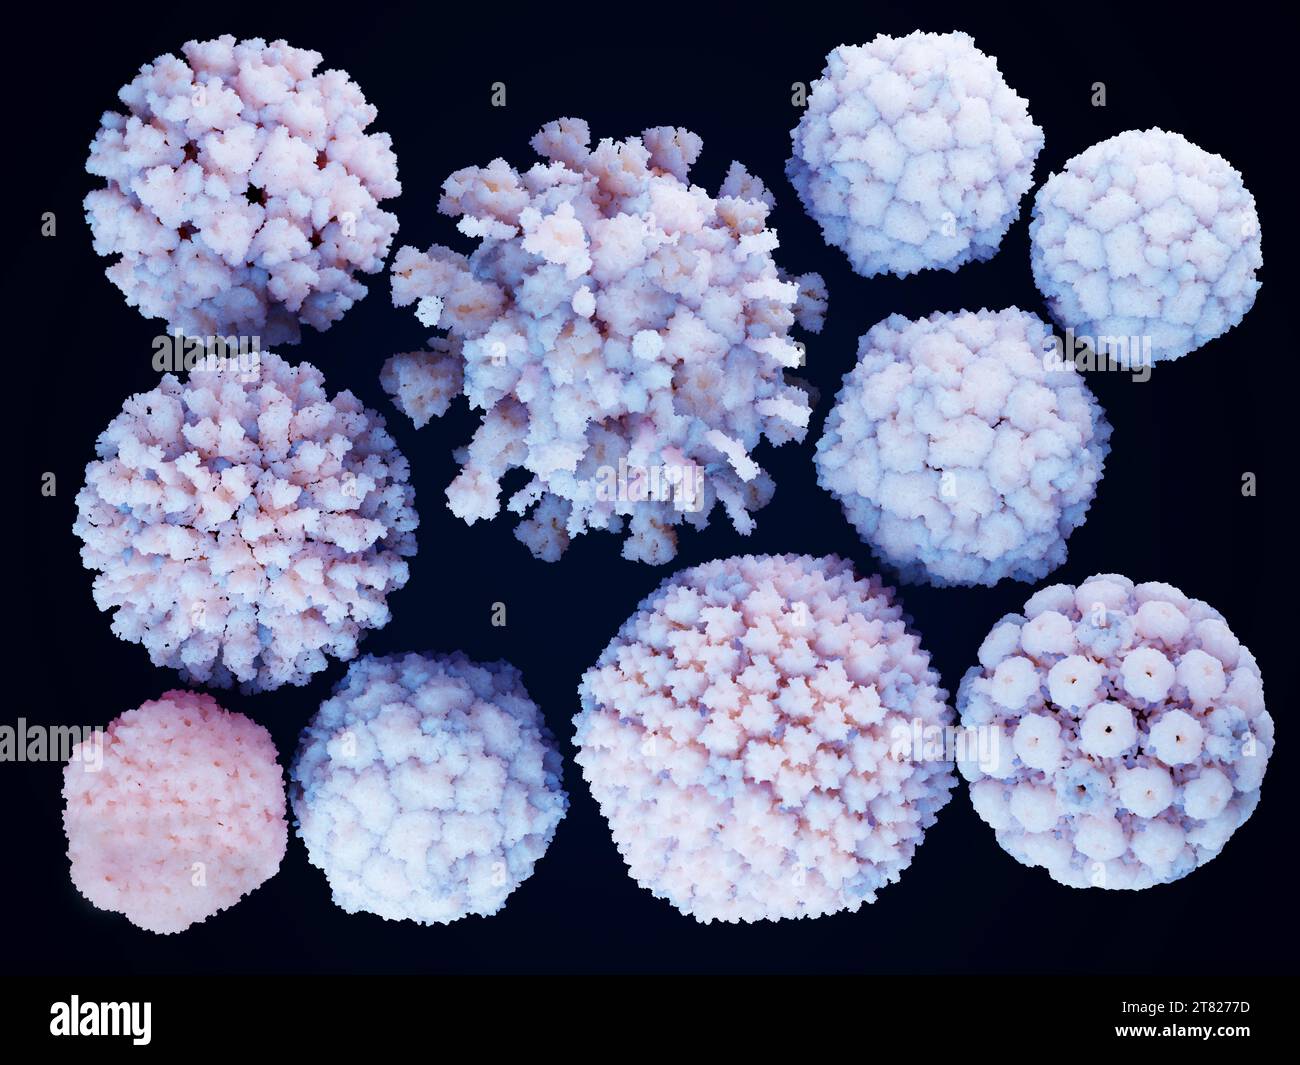 Human-infecting viruses, illustration Stock Photo